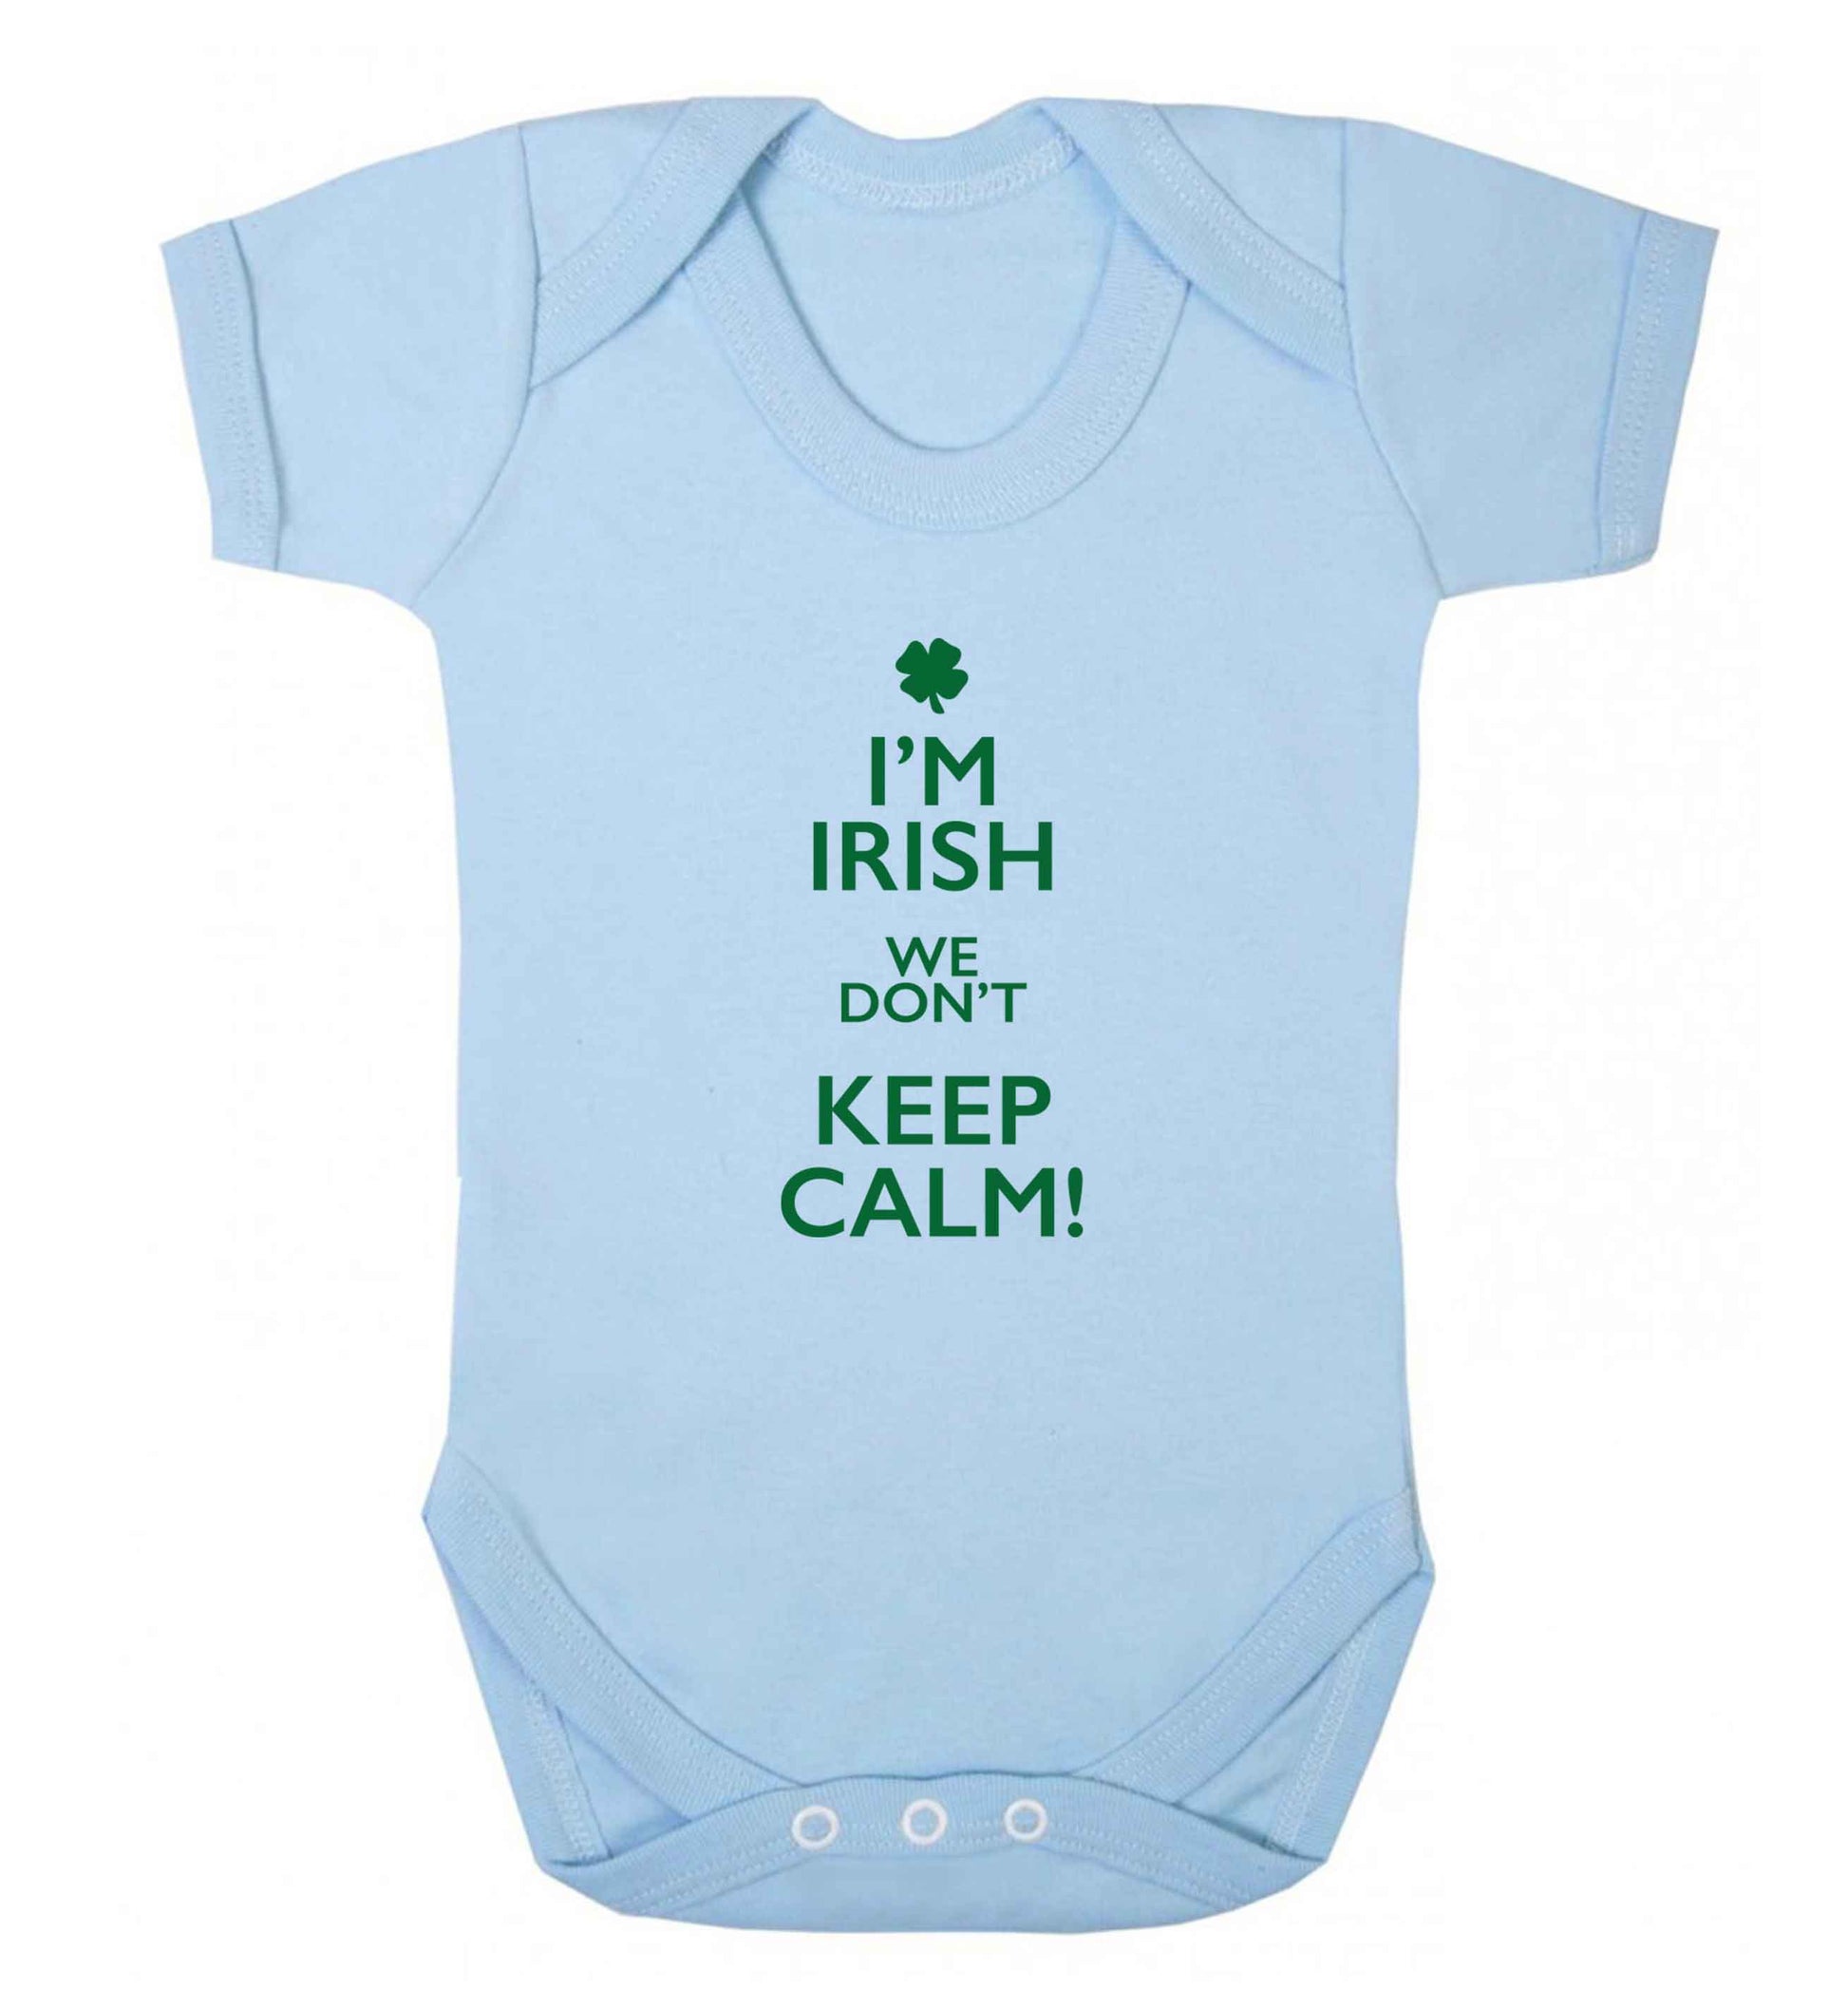 I'm Irish we don't keep calm baby vest pale blue 18-24 months